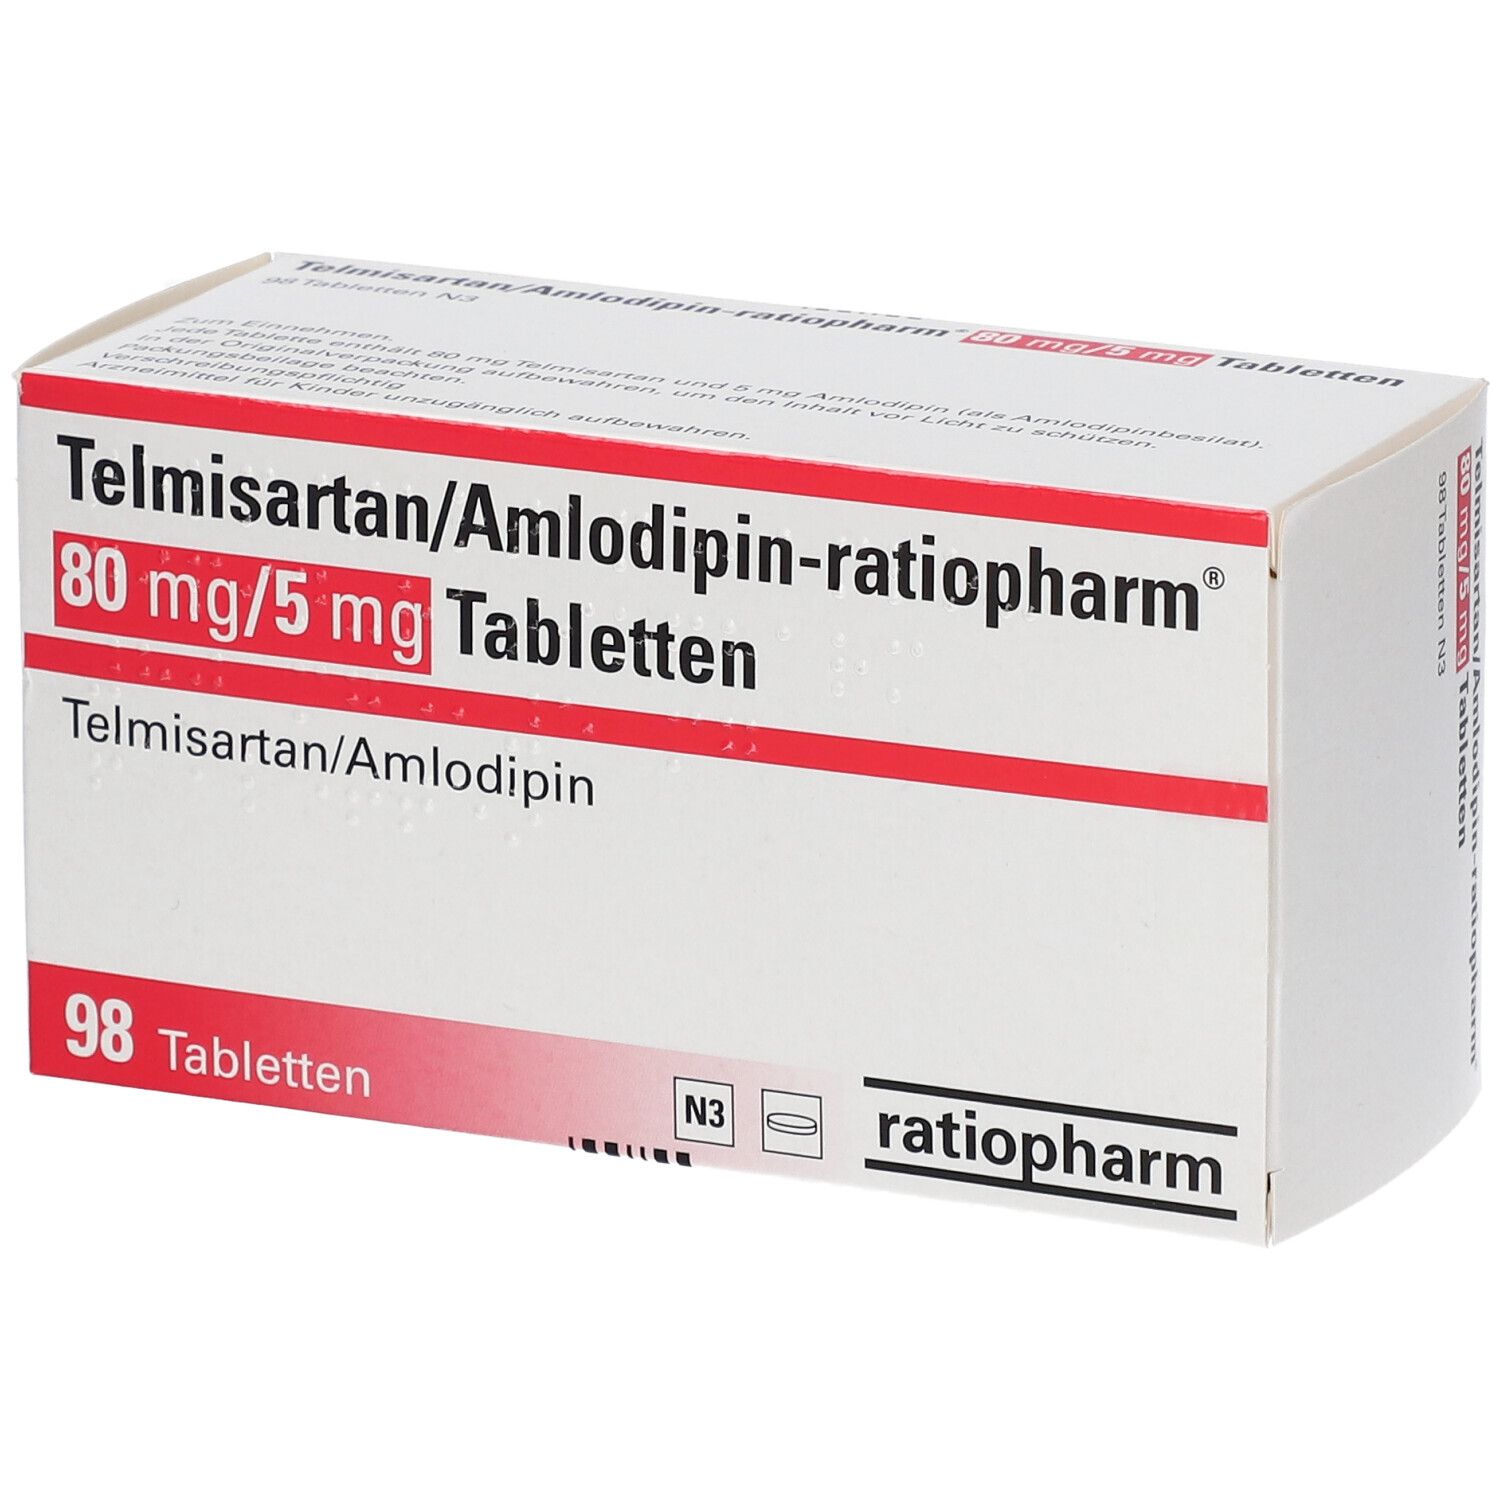 Telmisartan/Amlodipin-ratiopharm® 80 mg/5 mg